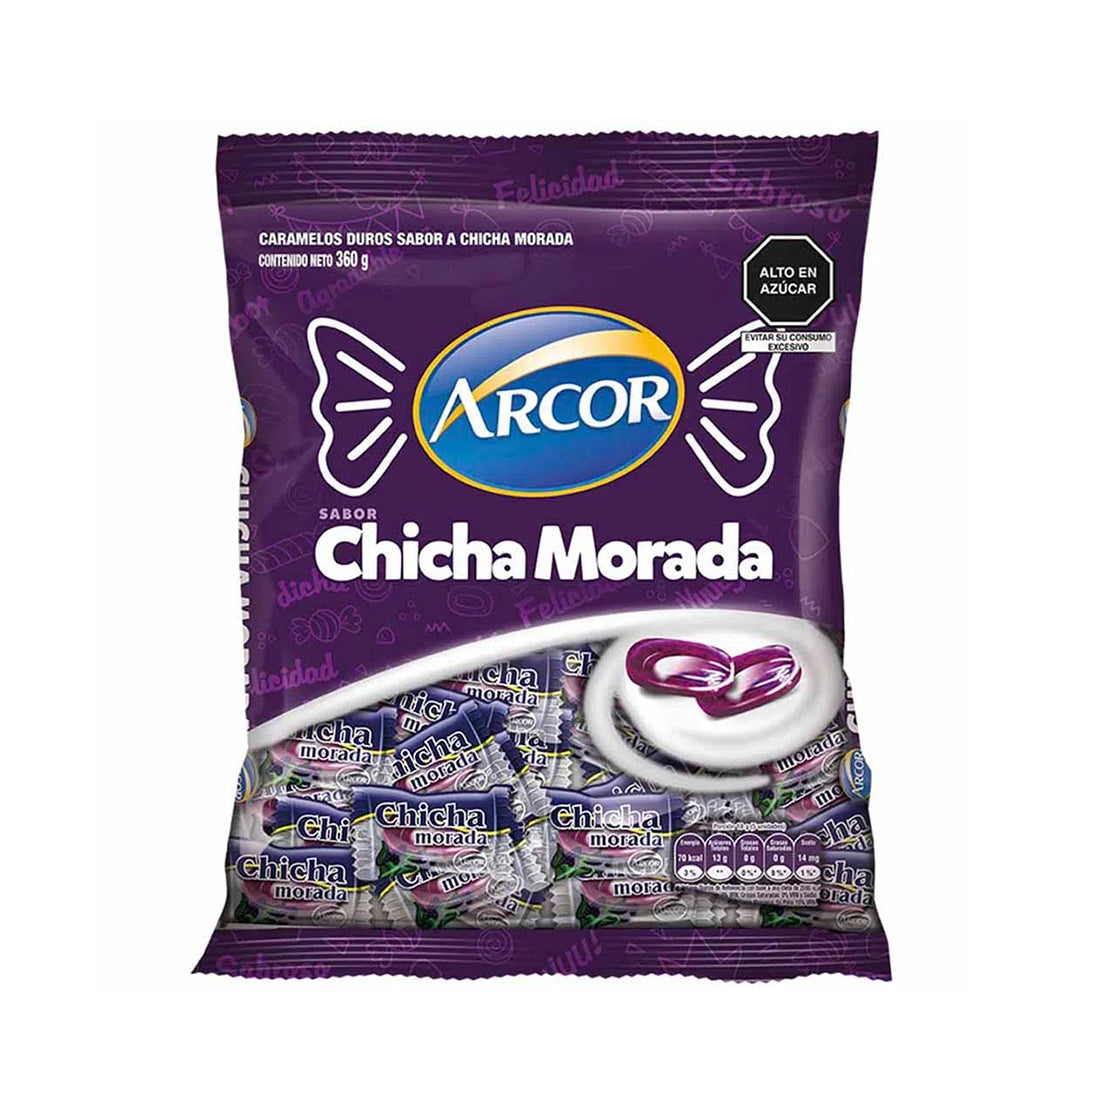 Arcor Caramelos Duros Sabor a Chicha Morada